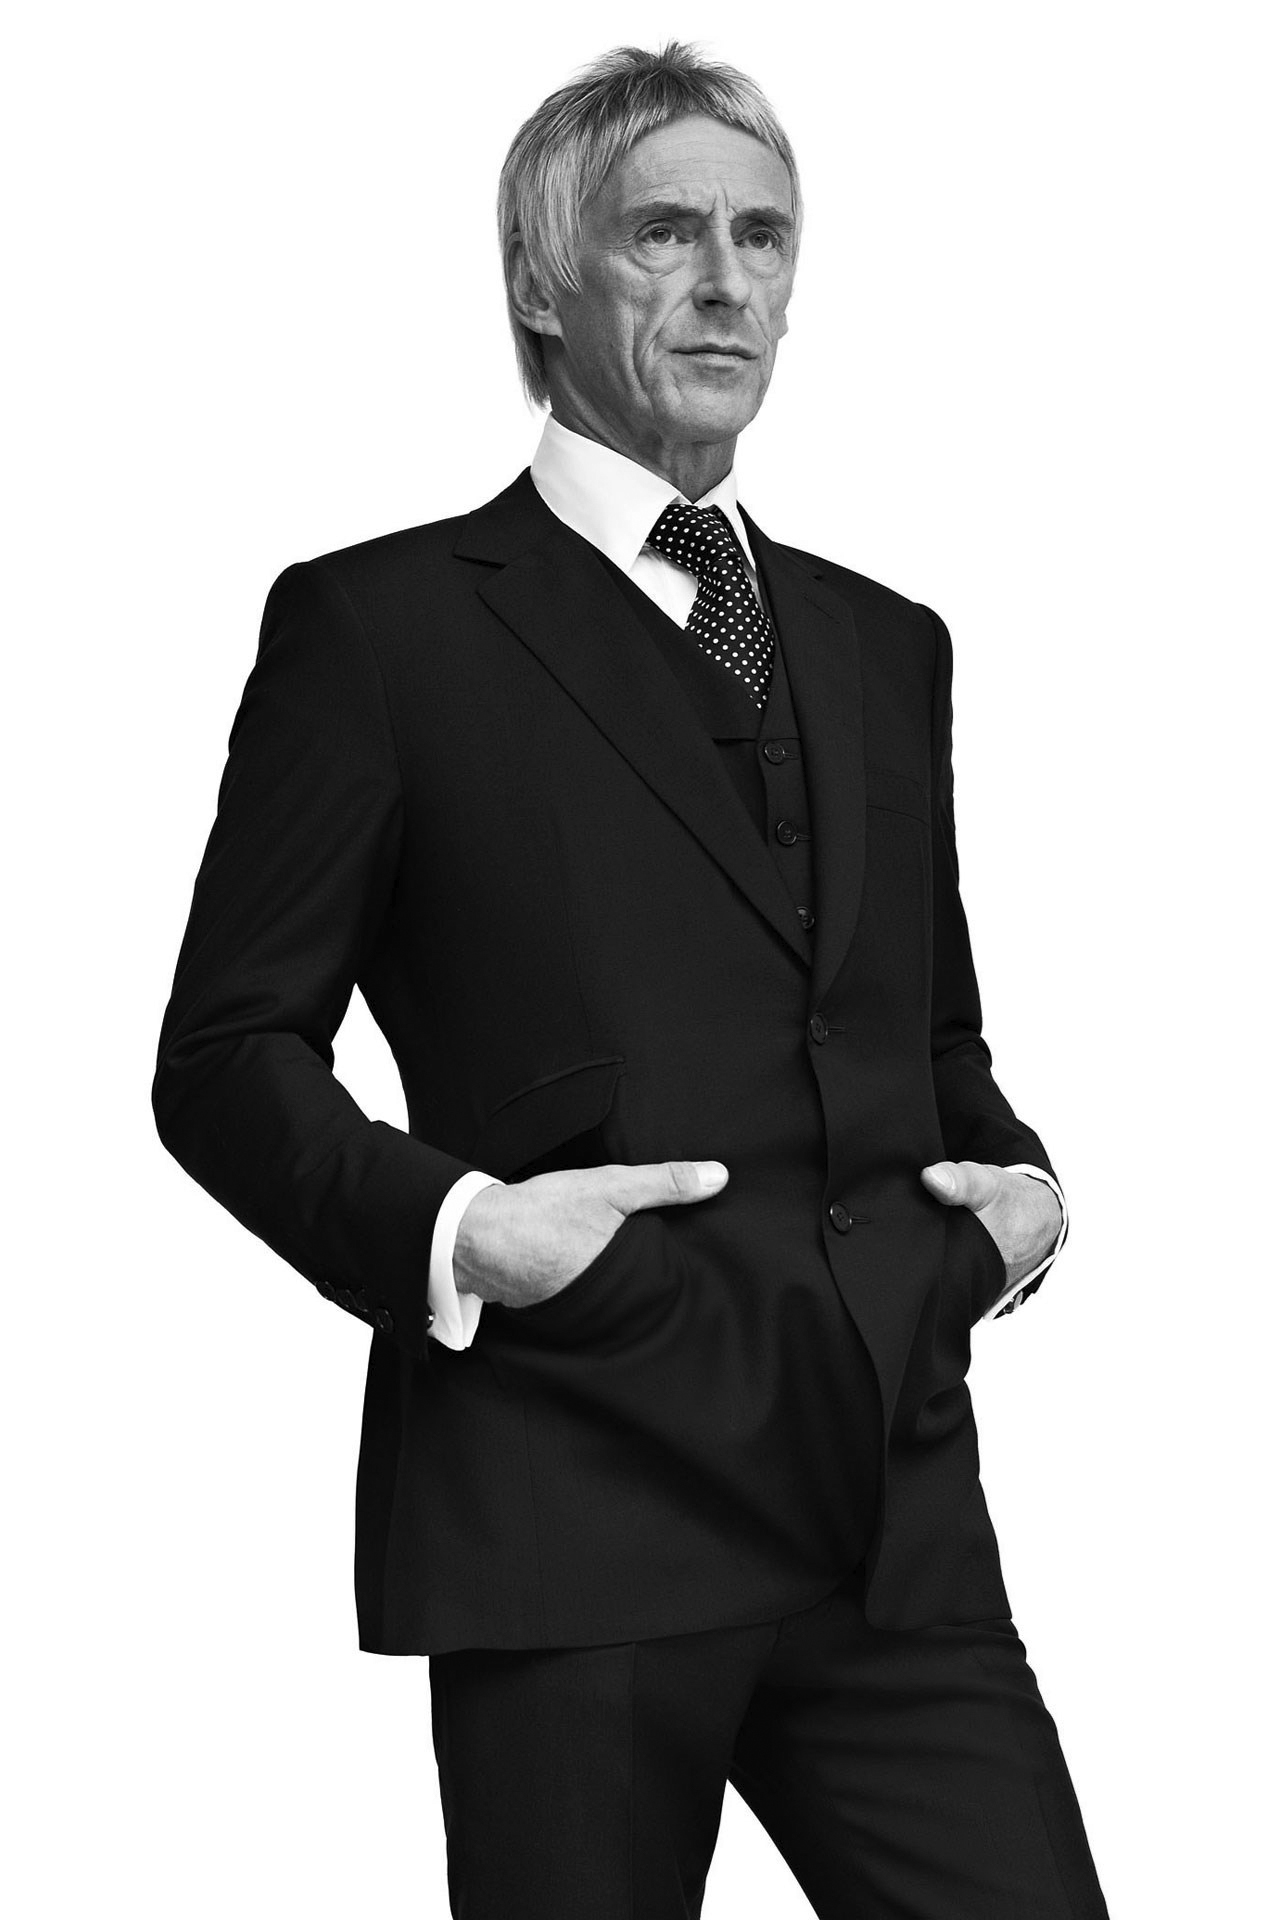 Paul Weller Backgrounds, Compatible - PC, Mobile, Gadgets| 1280x1920 px